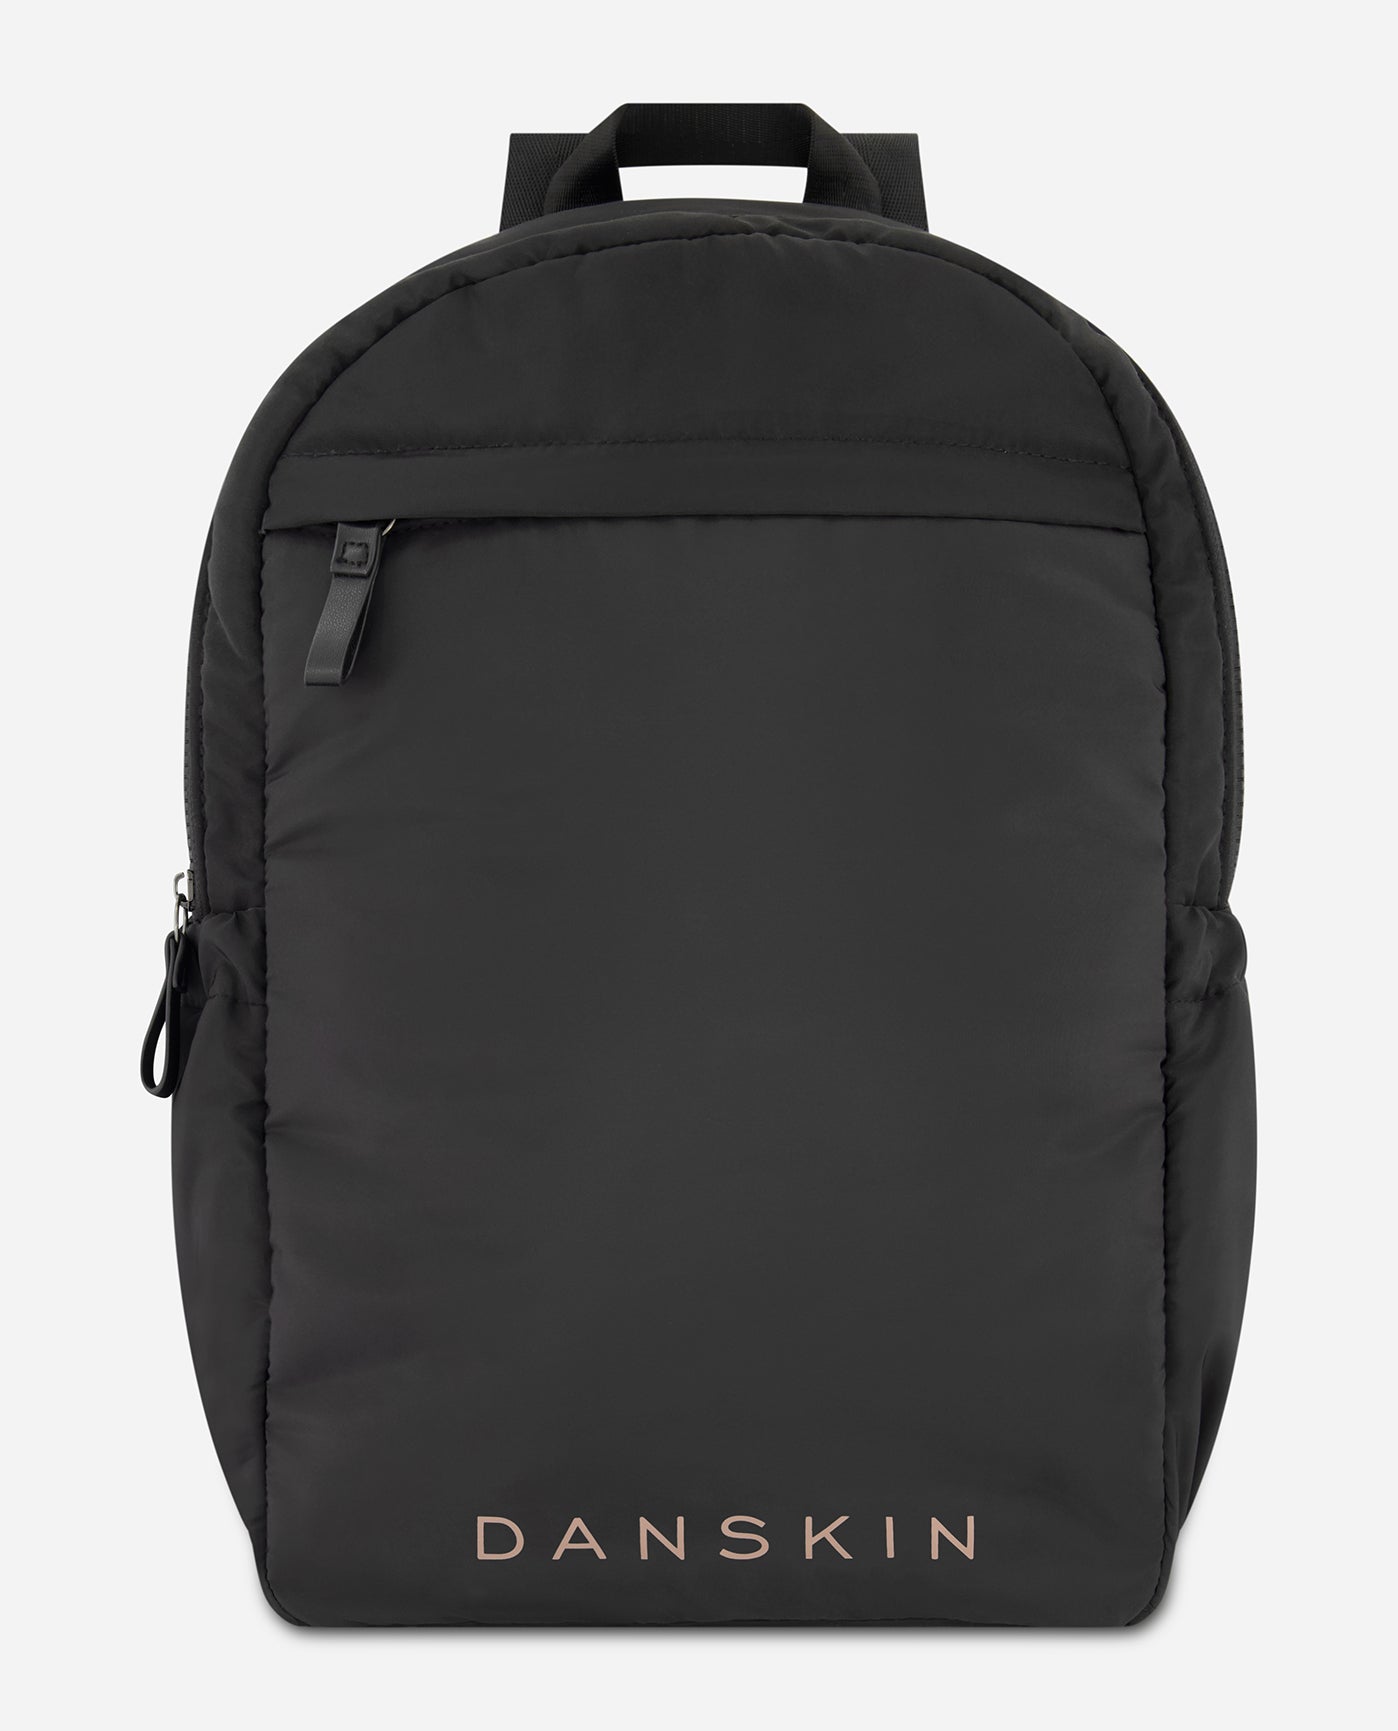 Danskin Handbags